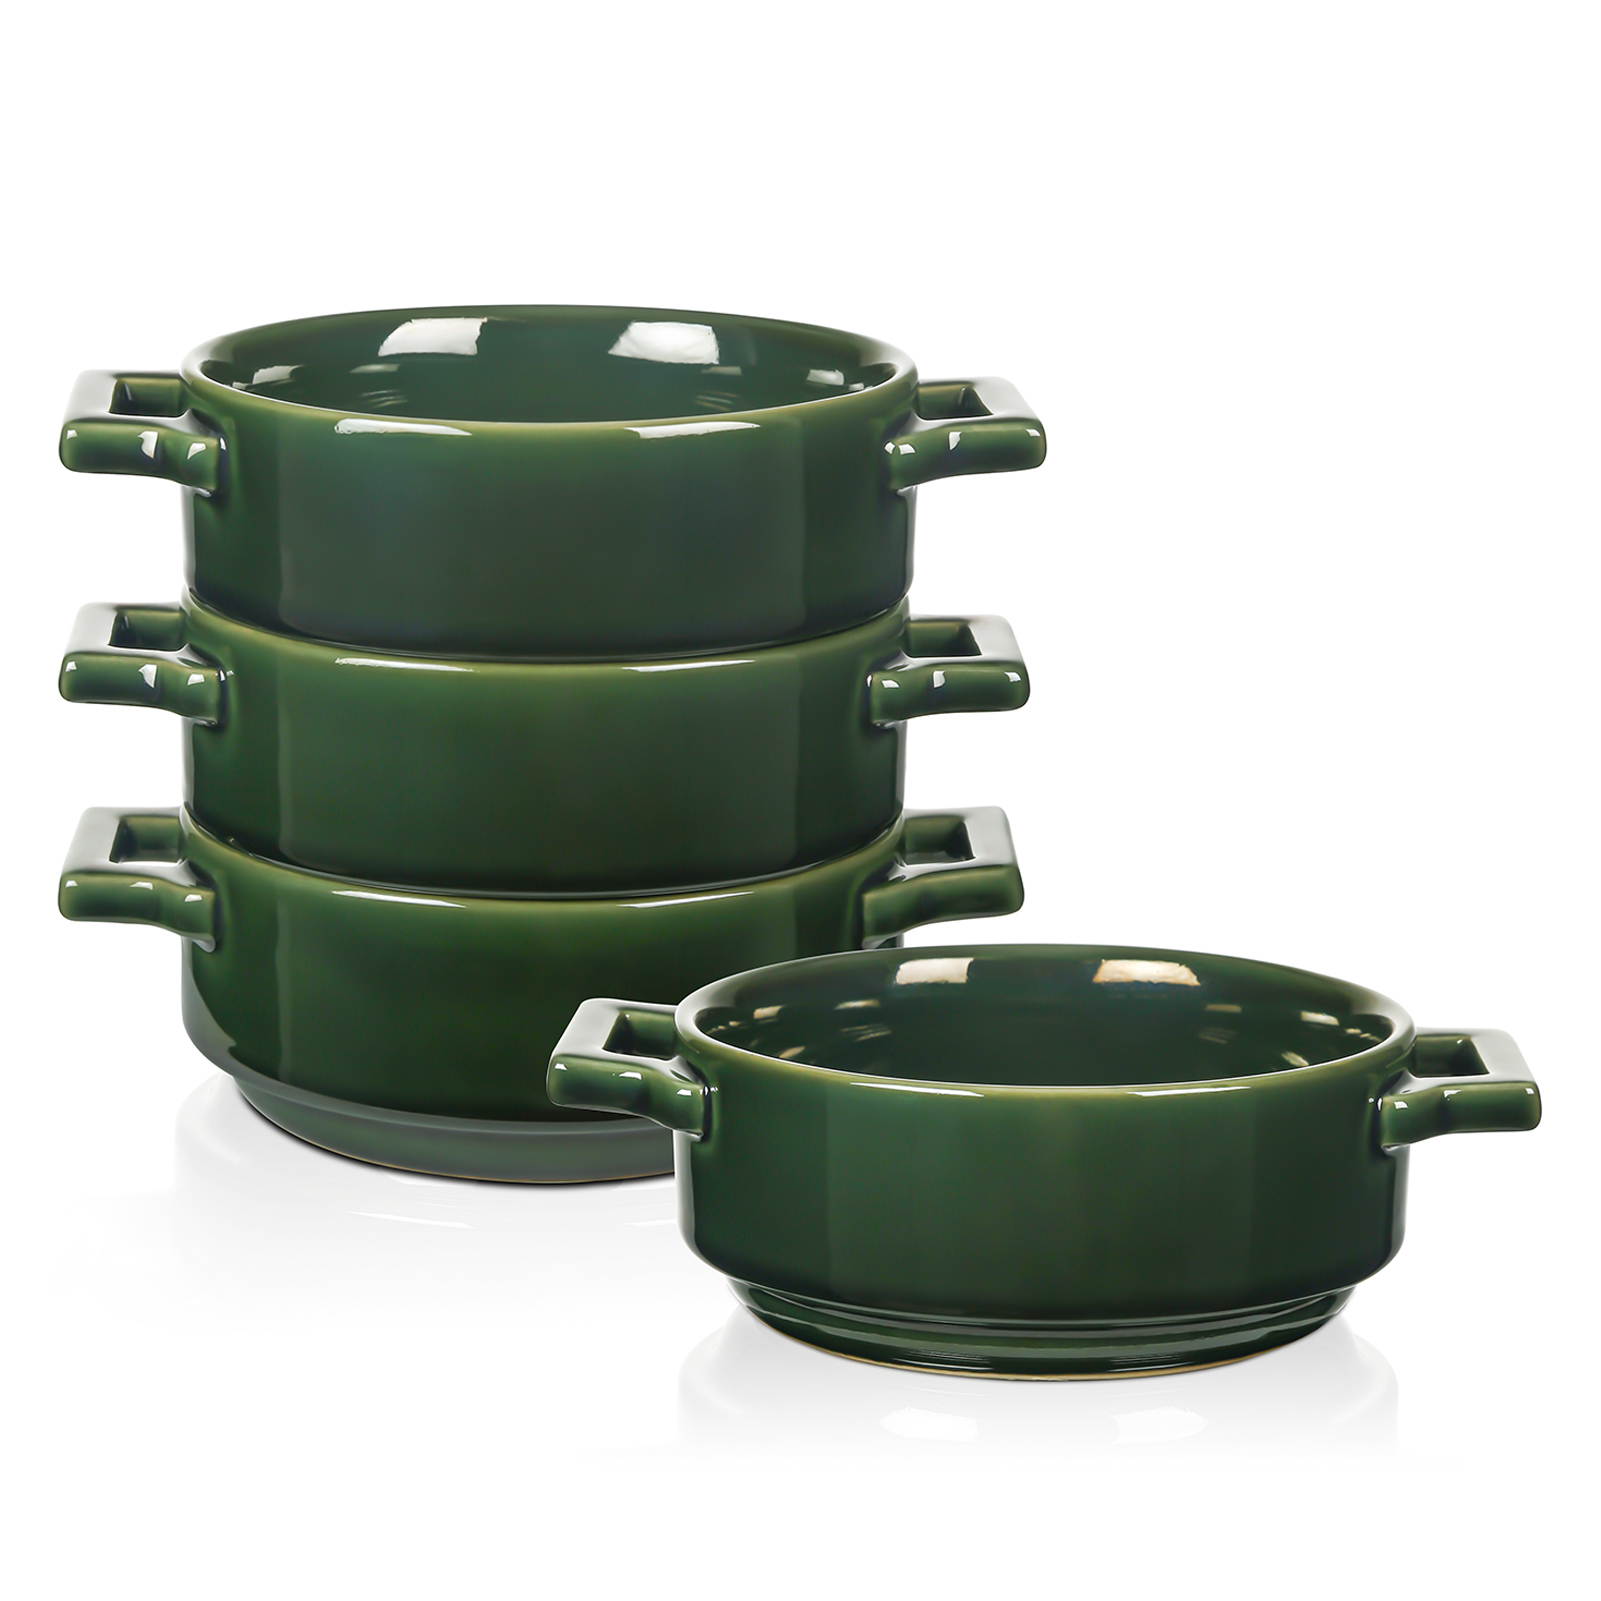 https://www.vicrays.com/wp-content/uploads/2022/06/1-green-soup-bowls.jpg